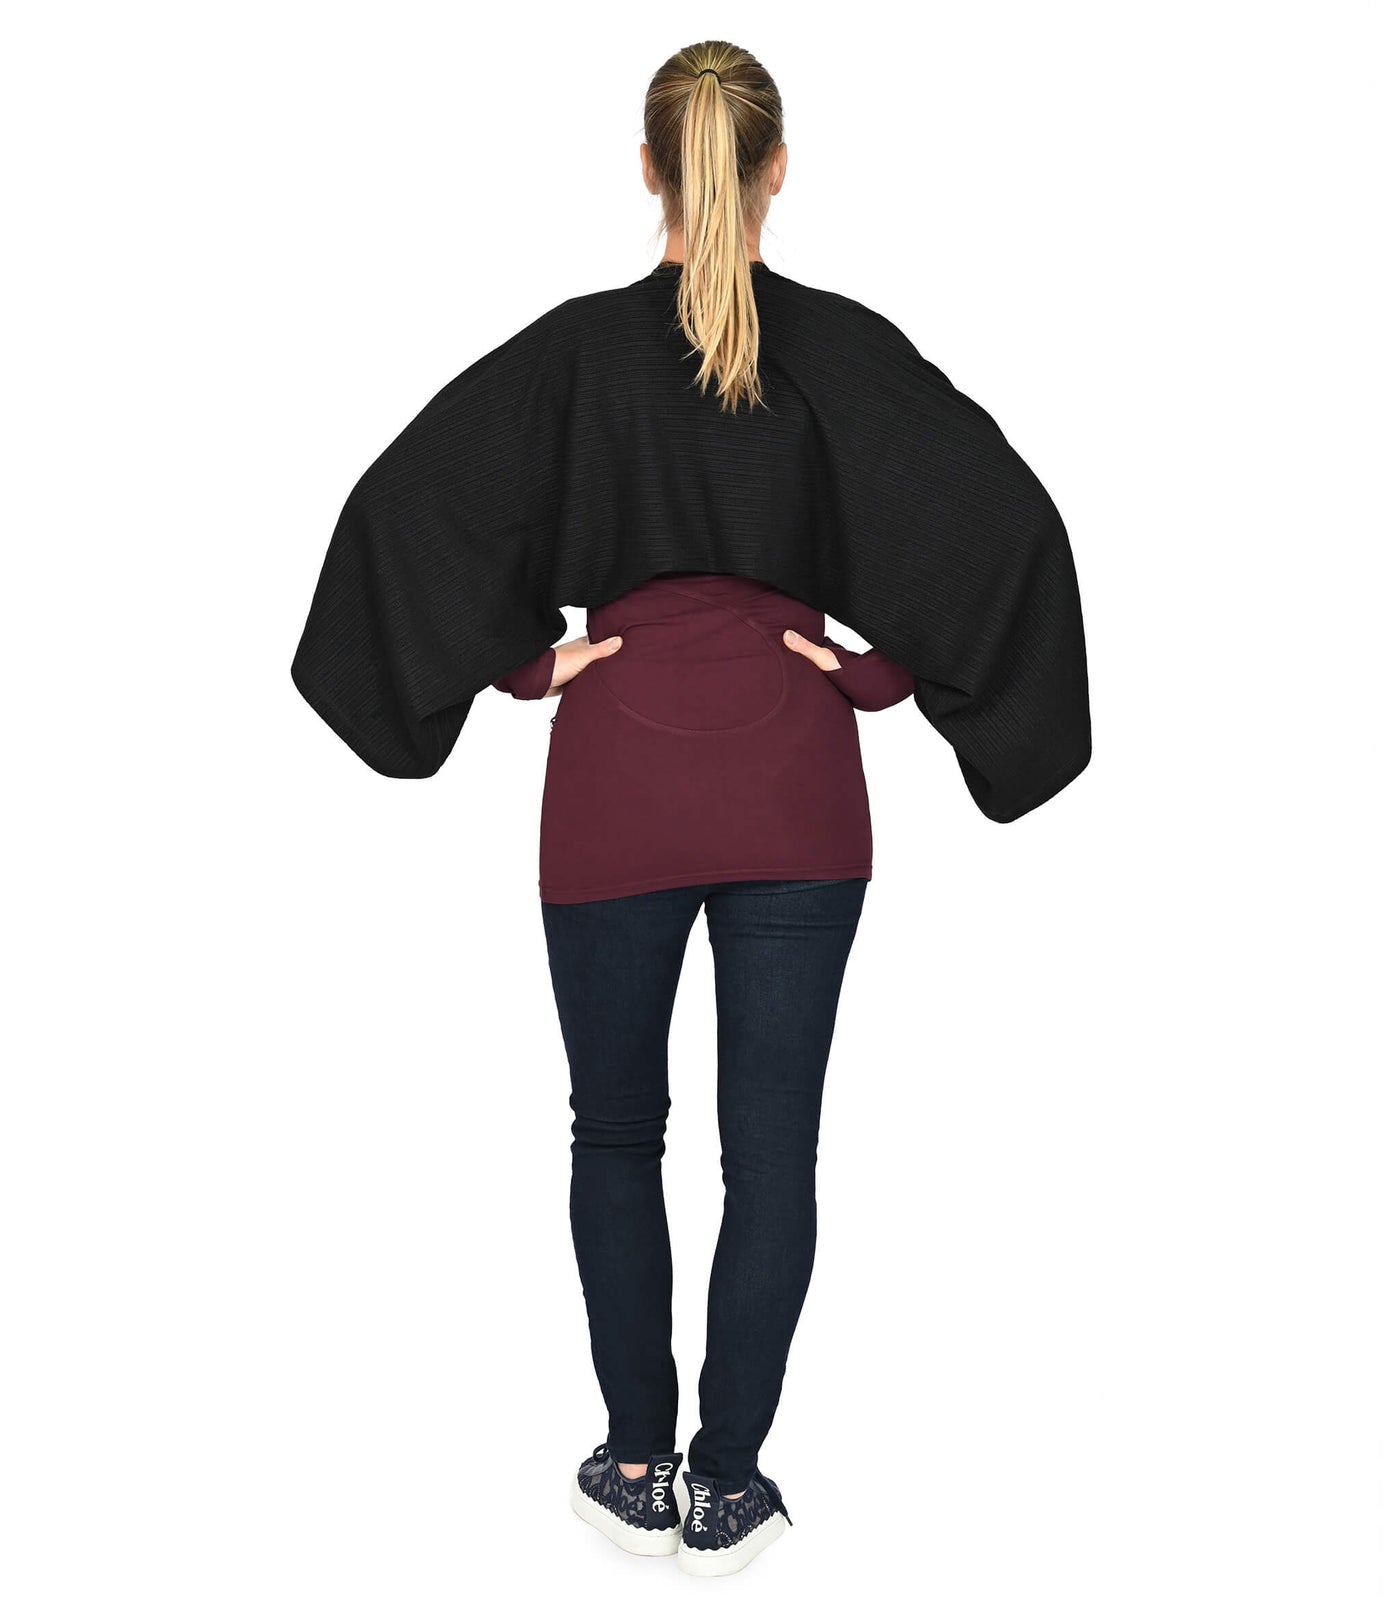 Tina - Robe noire transformable et confortable